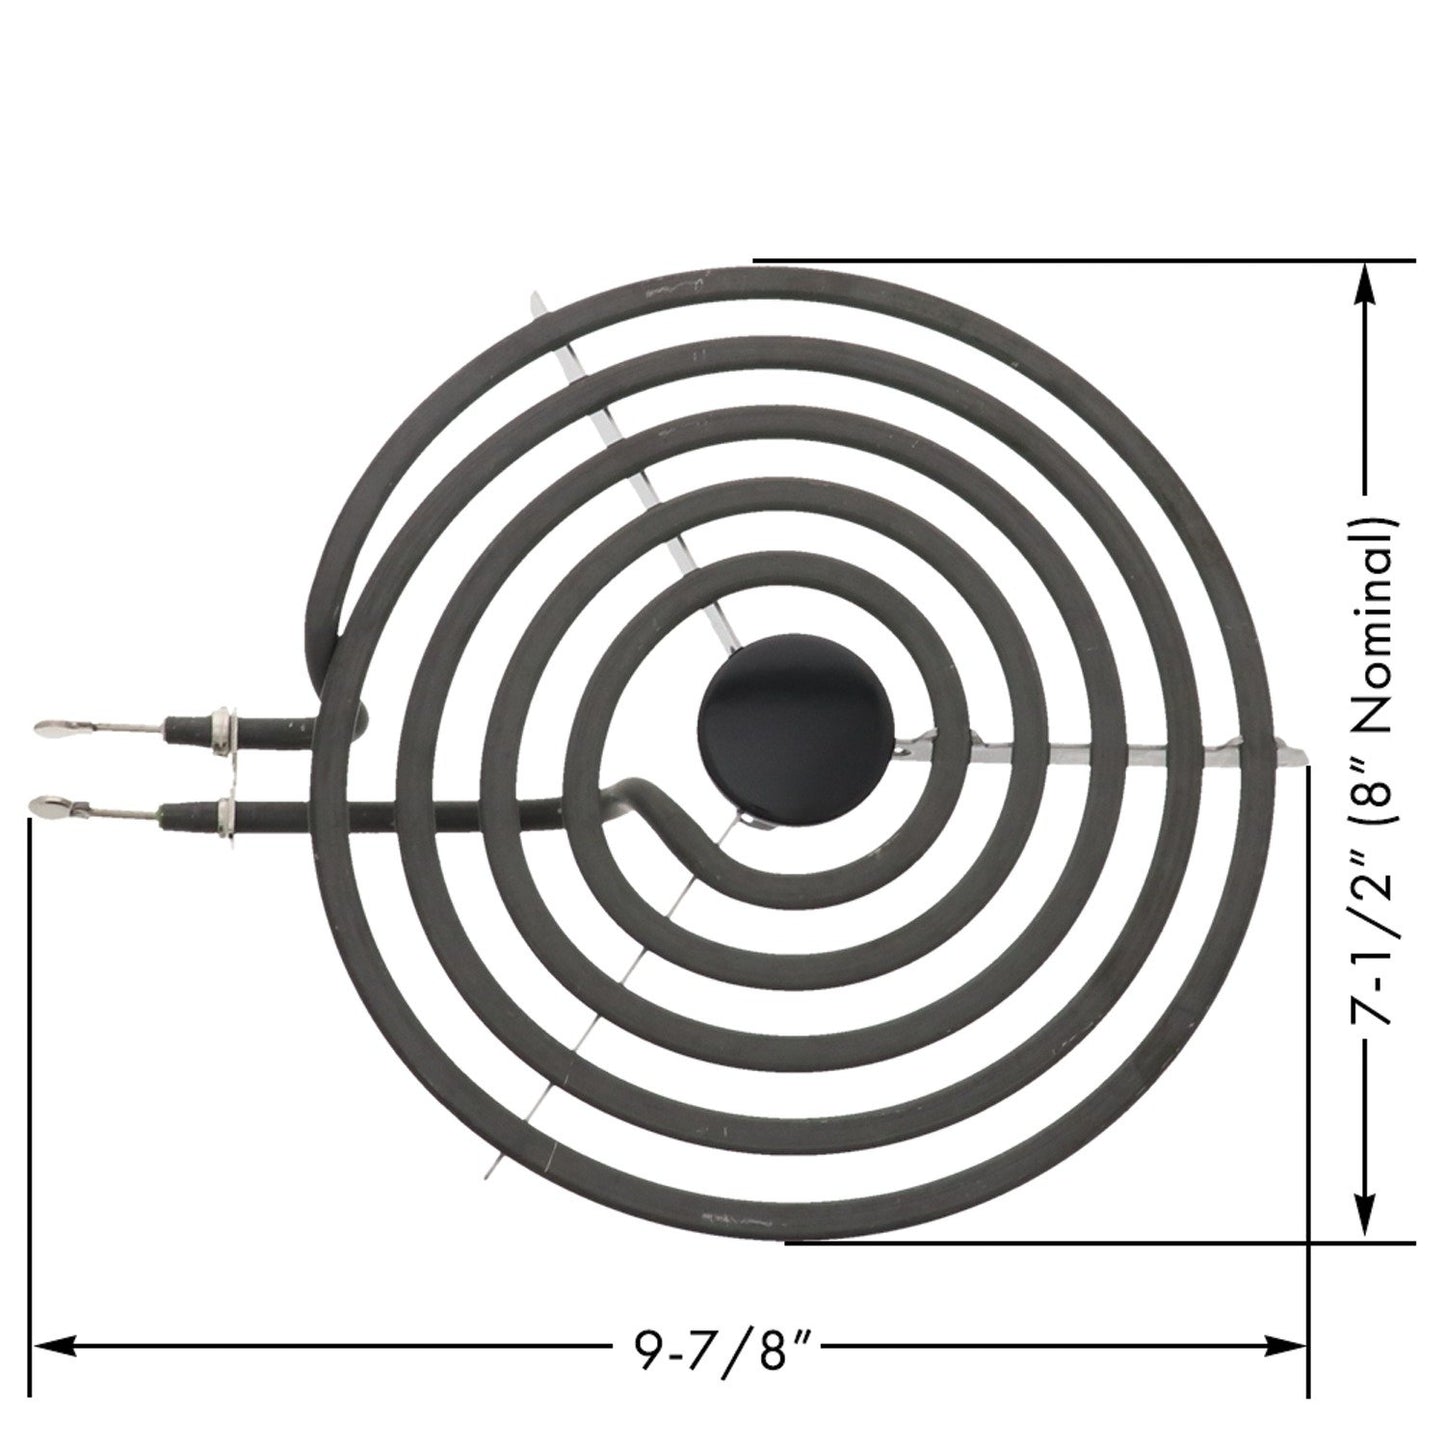 Erp S58Y21 Universal Range Surface Element (8", 5 Turn)